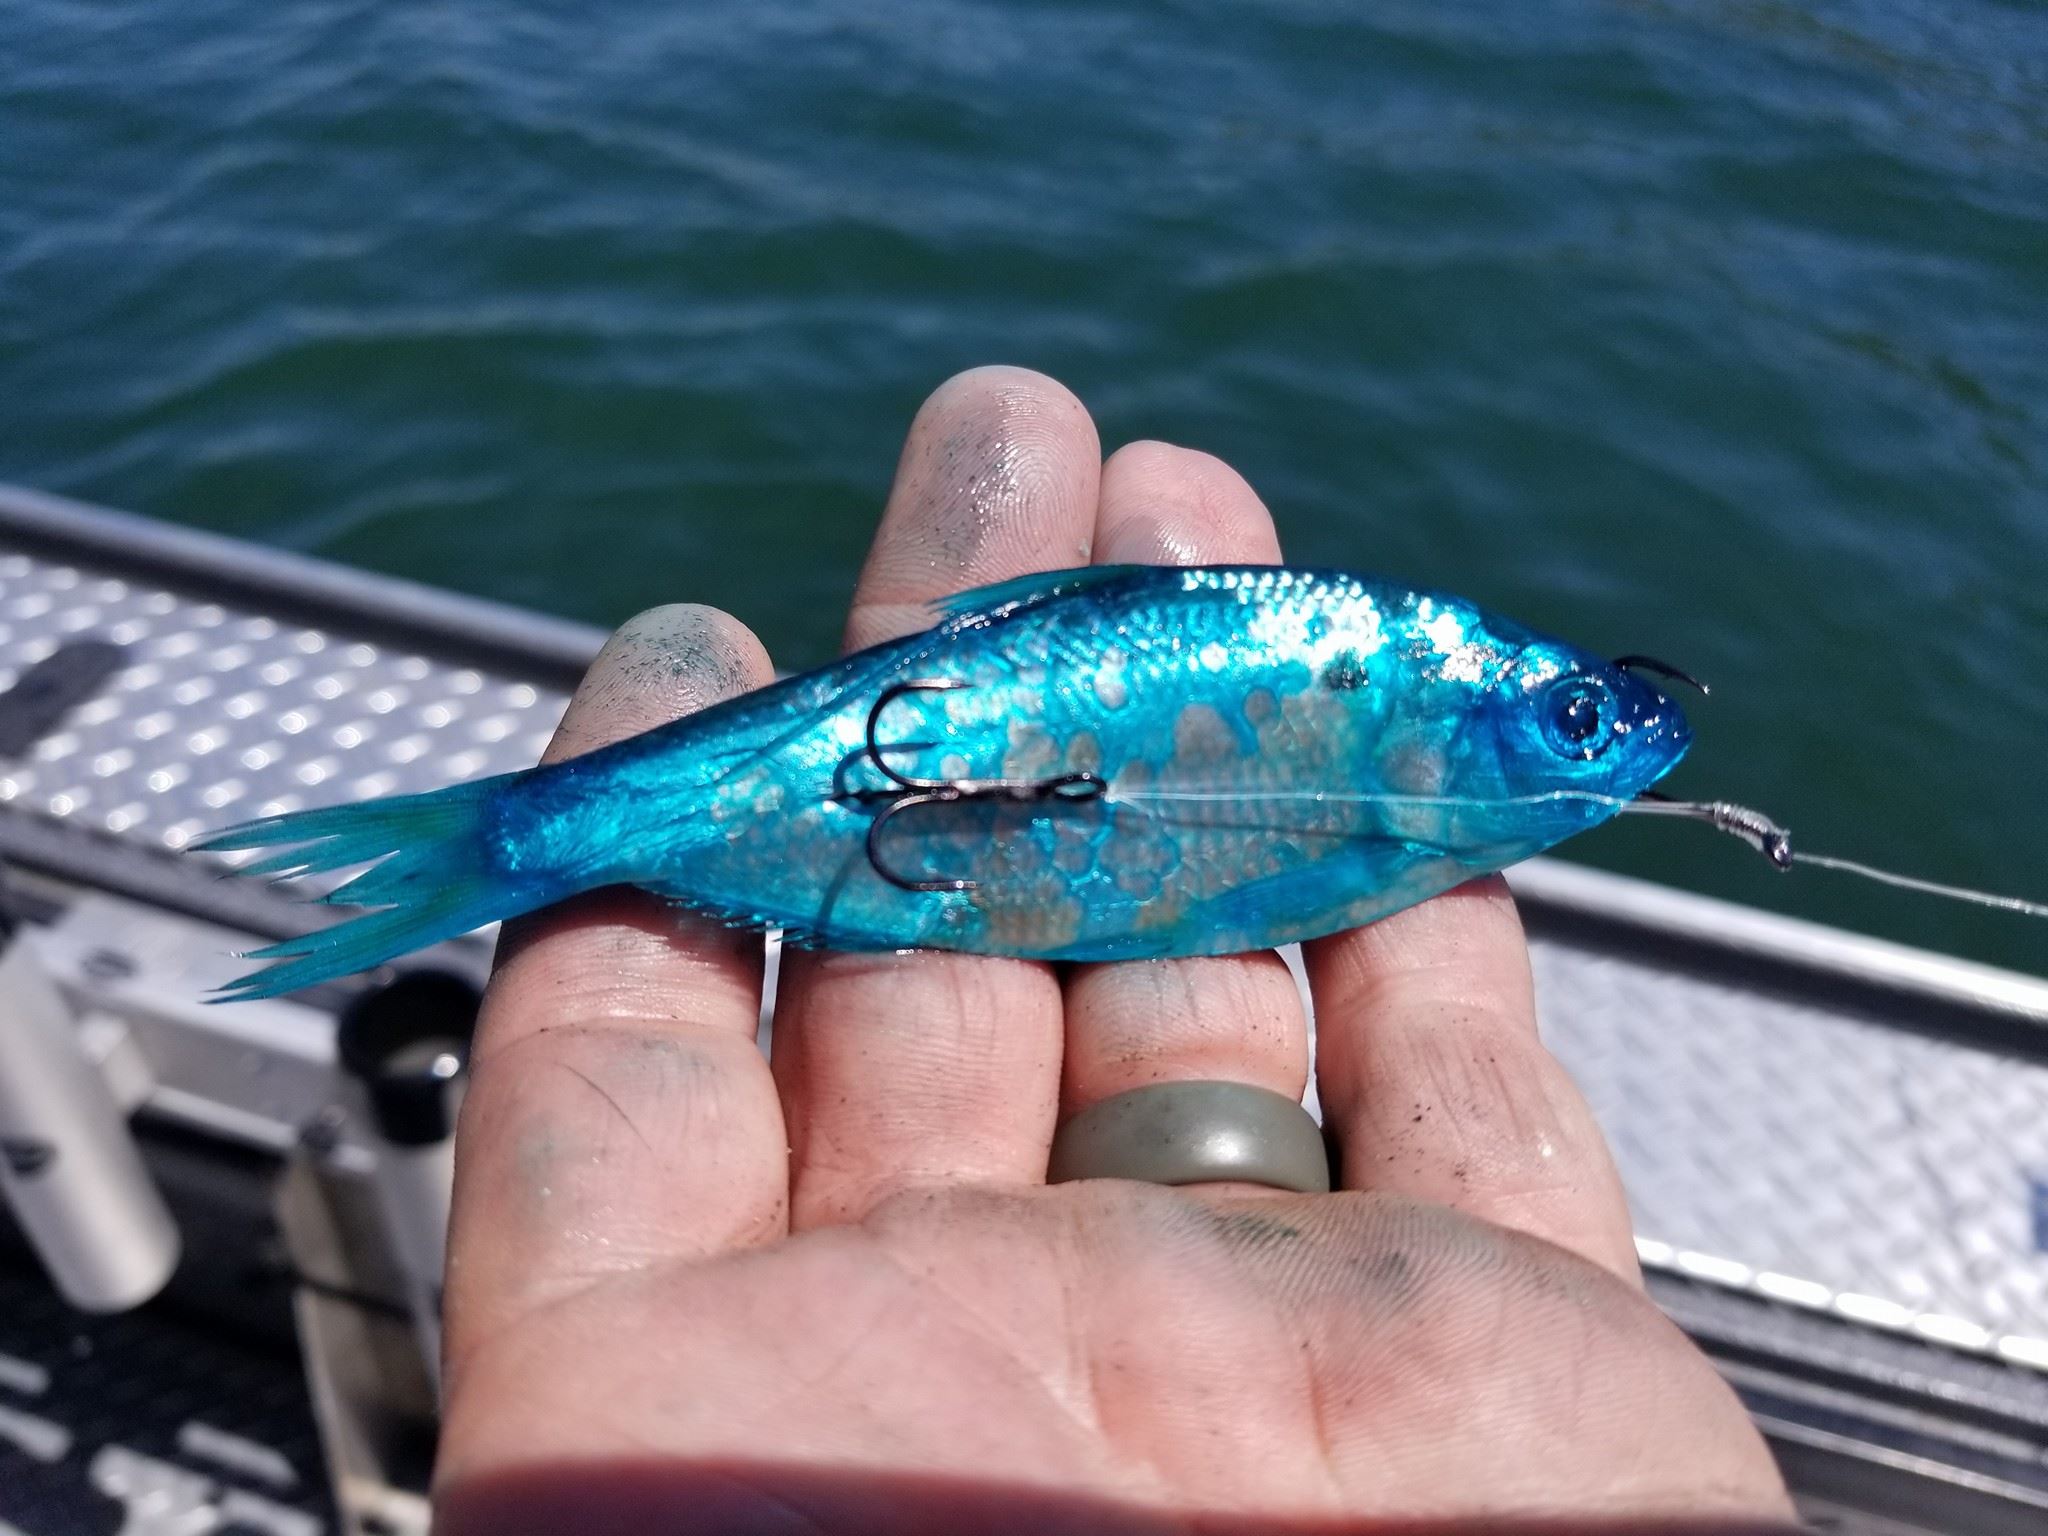 Big trout tactics for Shasta Lake. — Jeff Goodwin Fishing